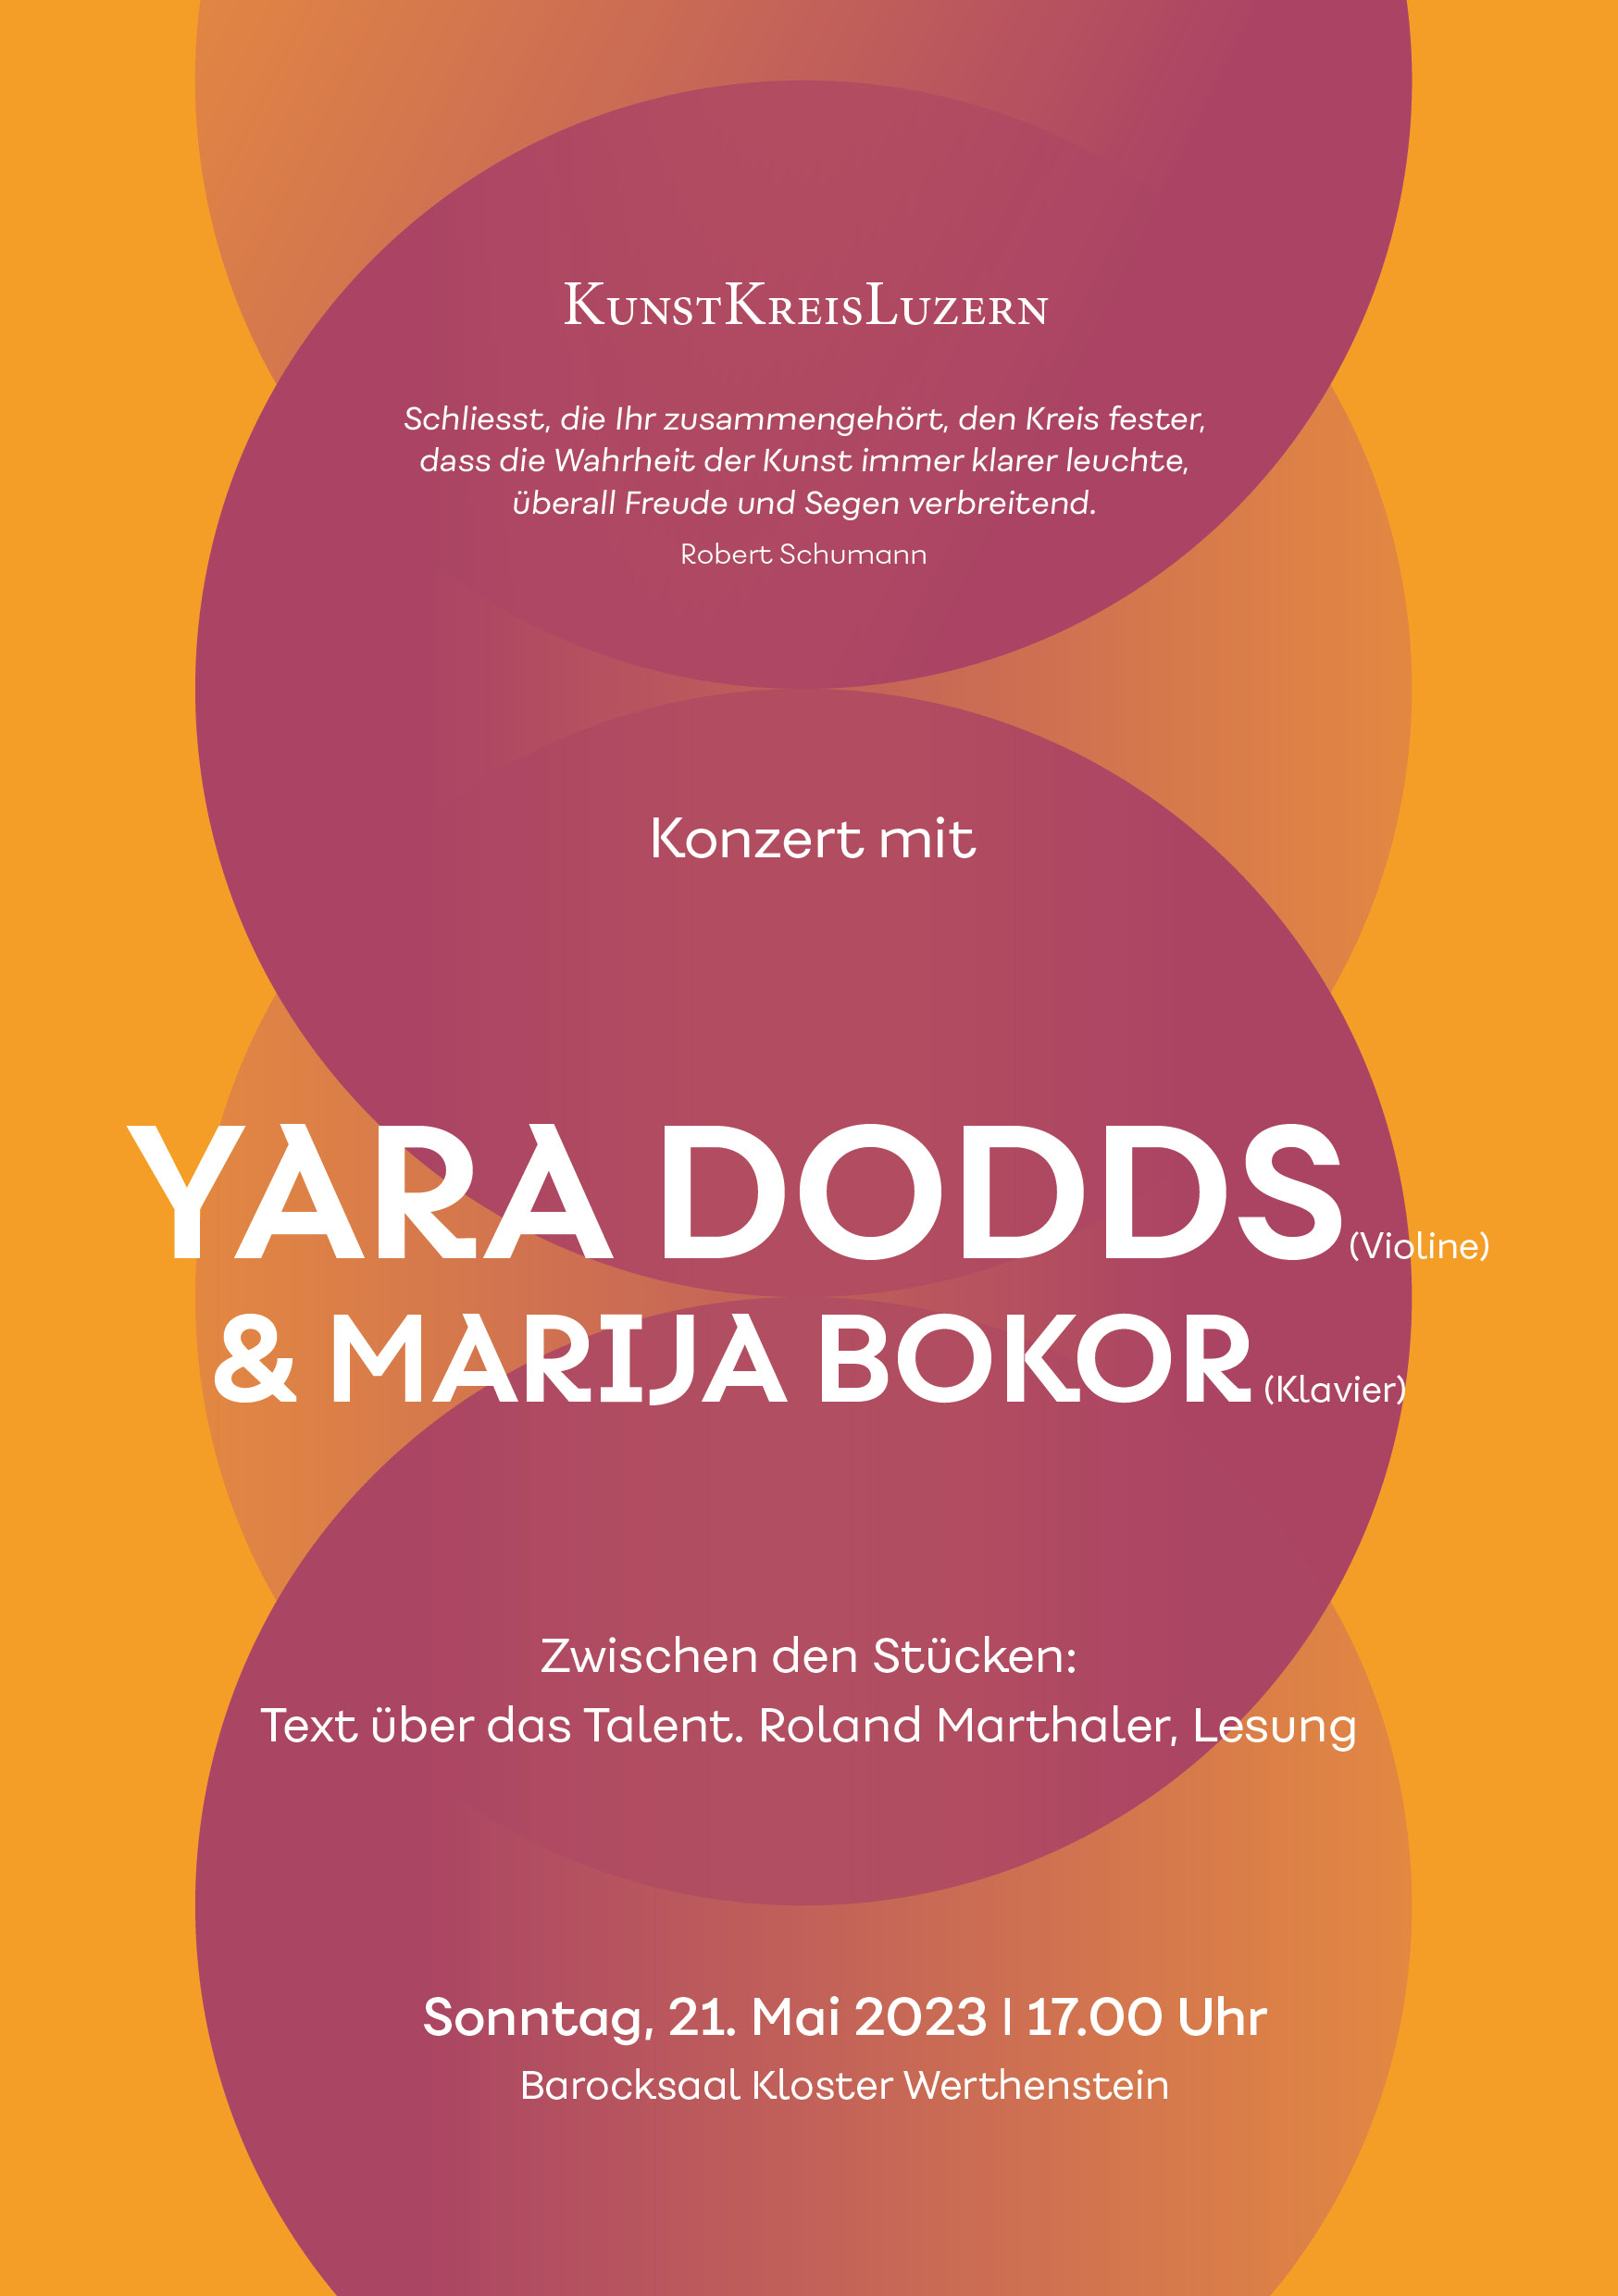 Yara Dodds & Marija Bokor KunstKreisLuzern 2023